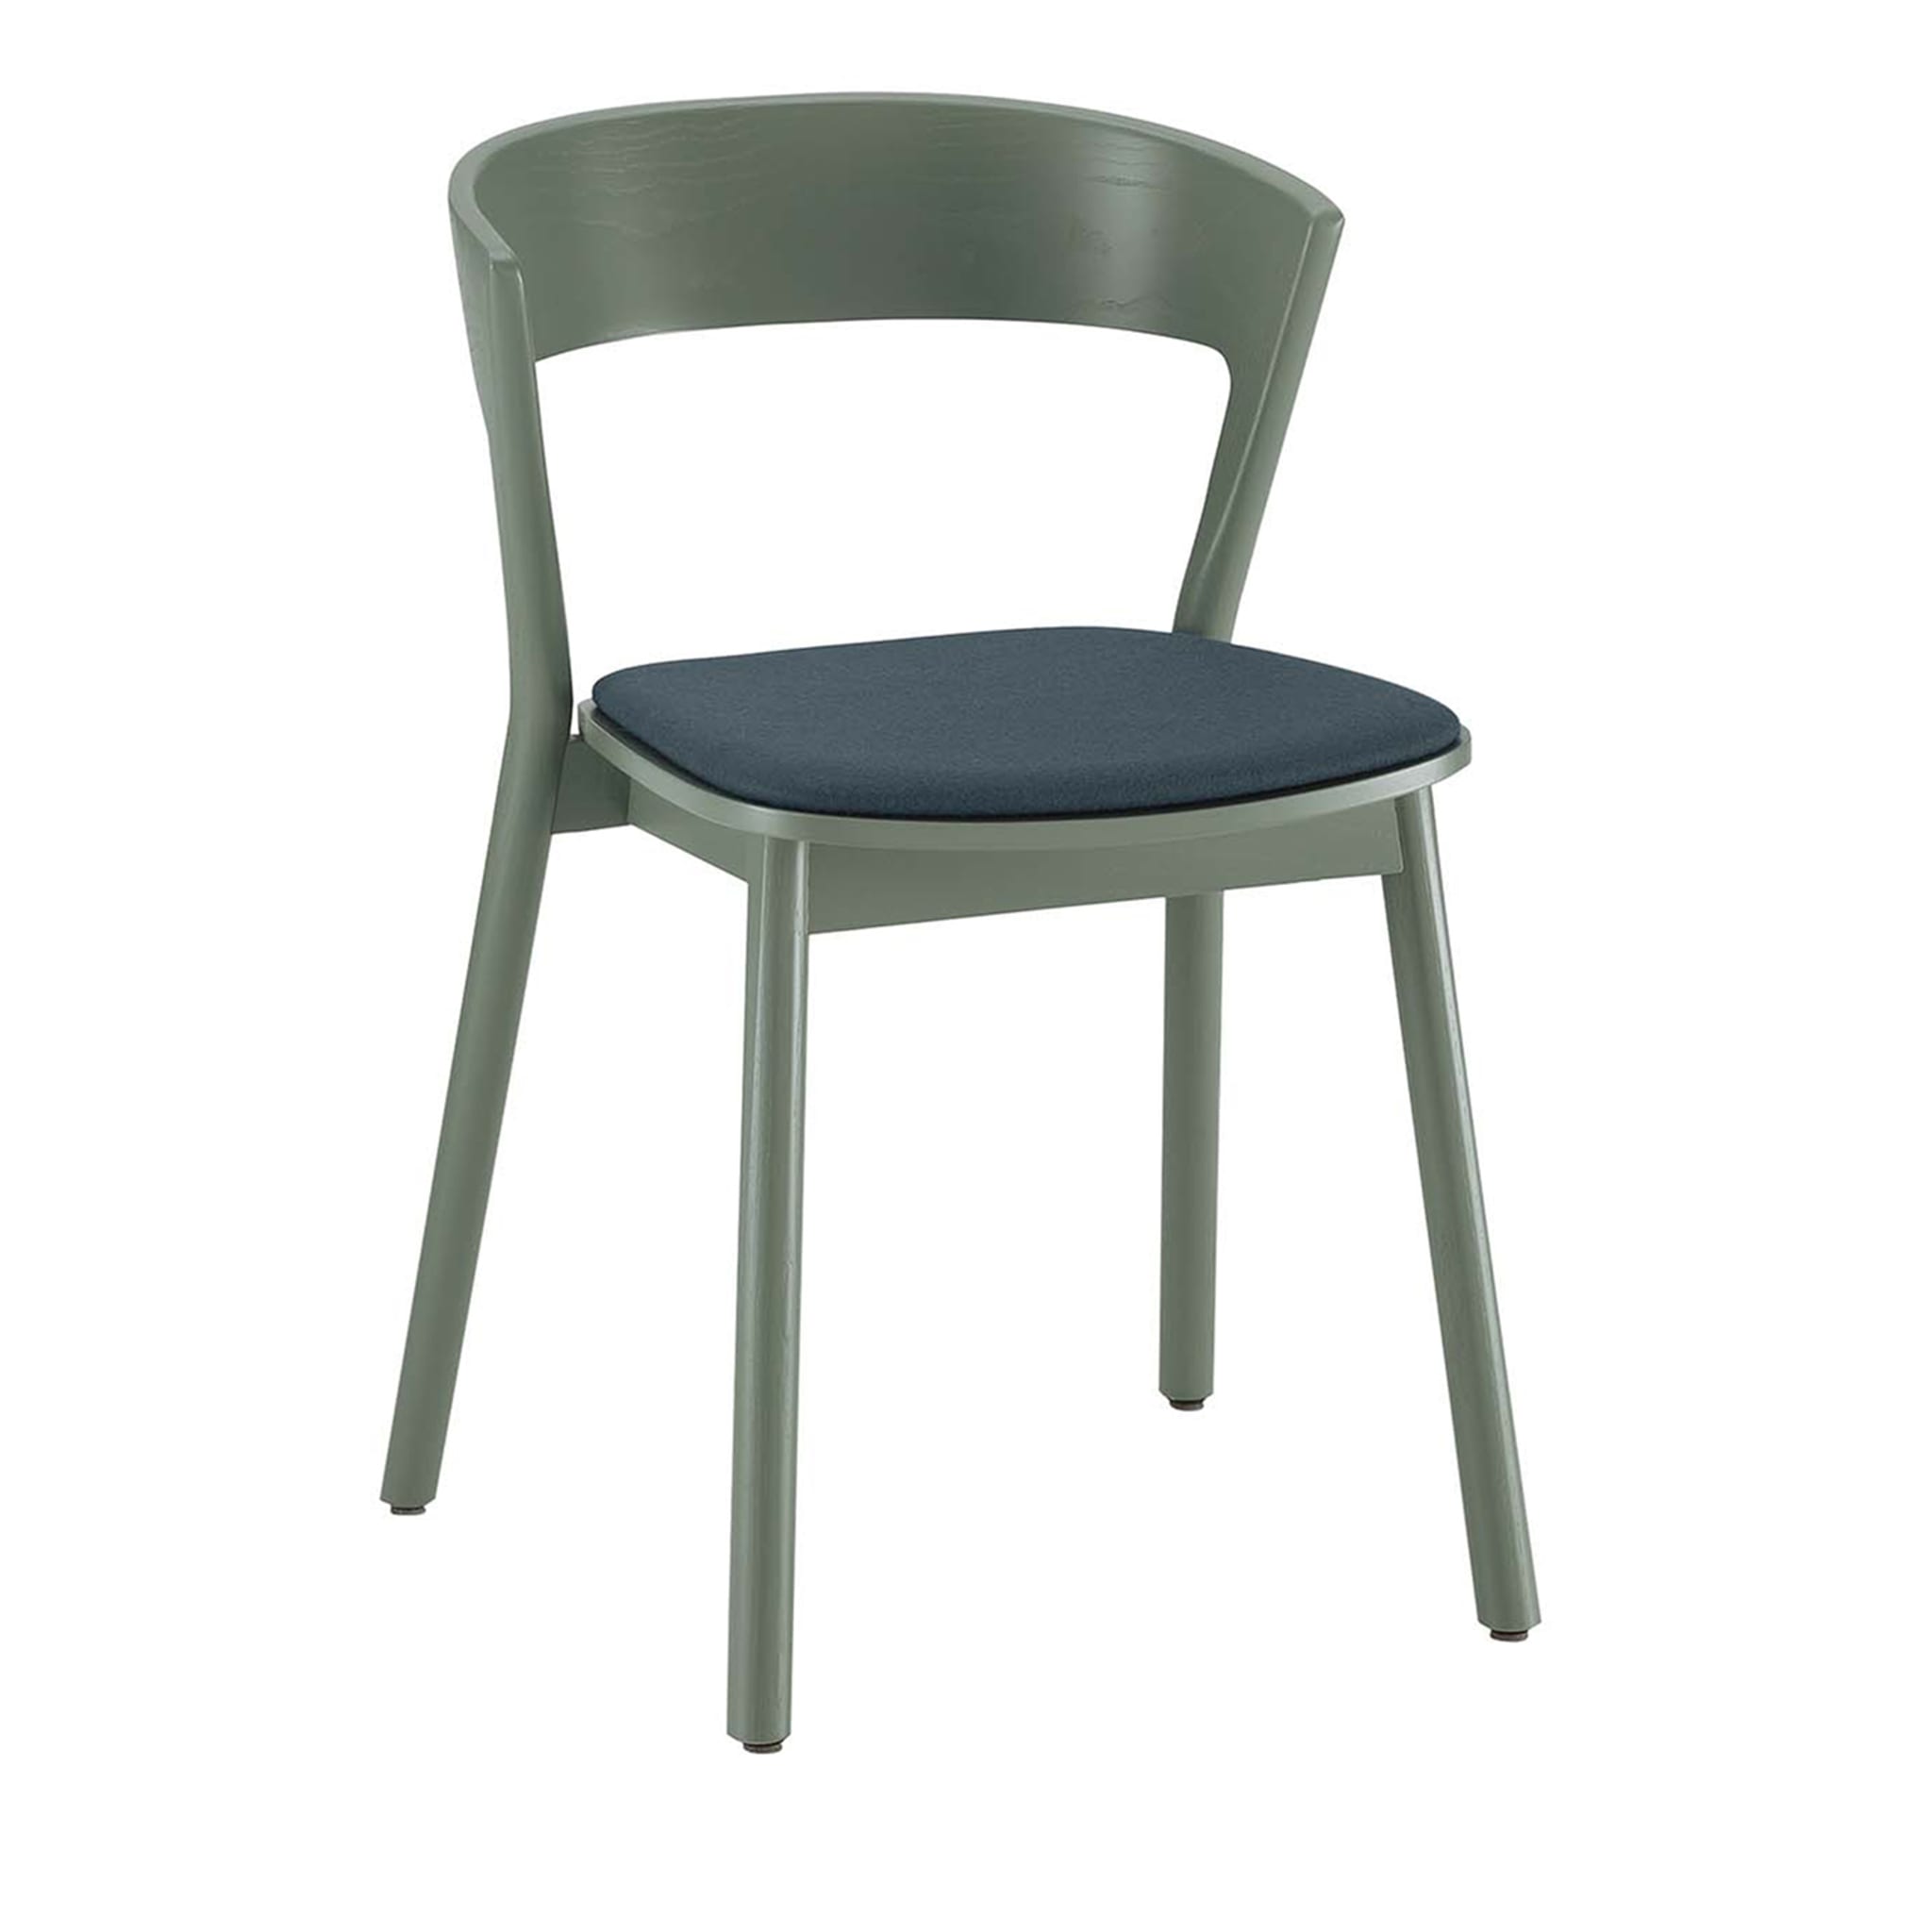 Edith Green Chair #1 by Massimo Broglio - Main view